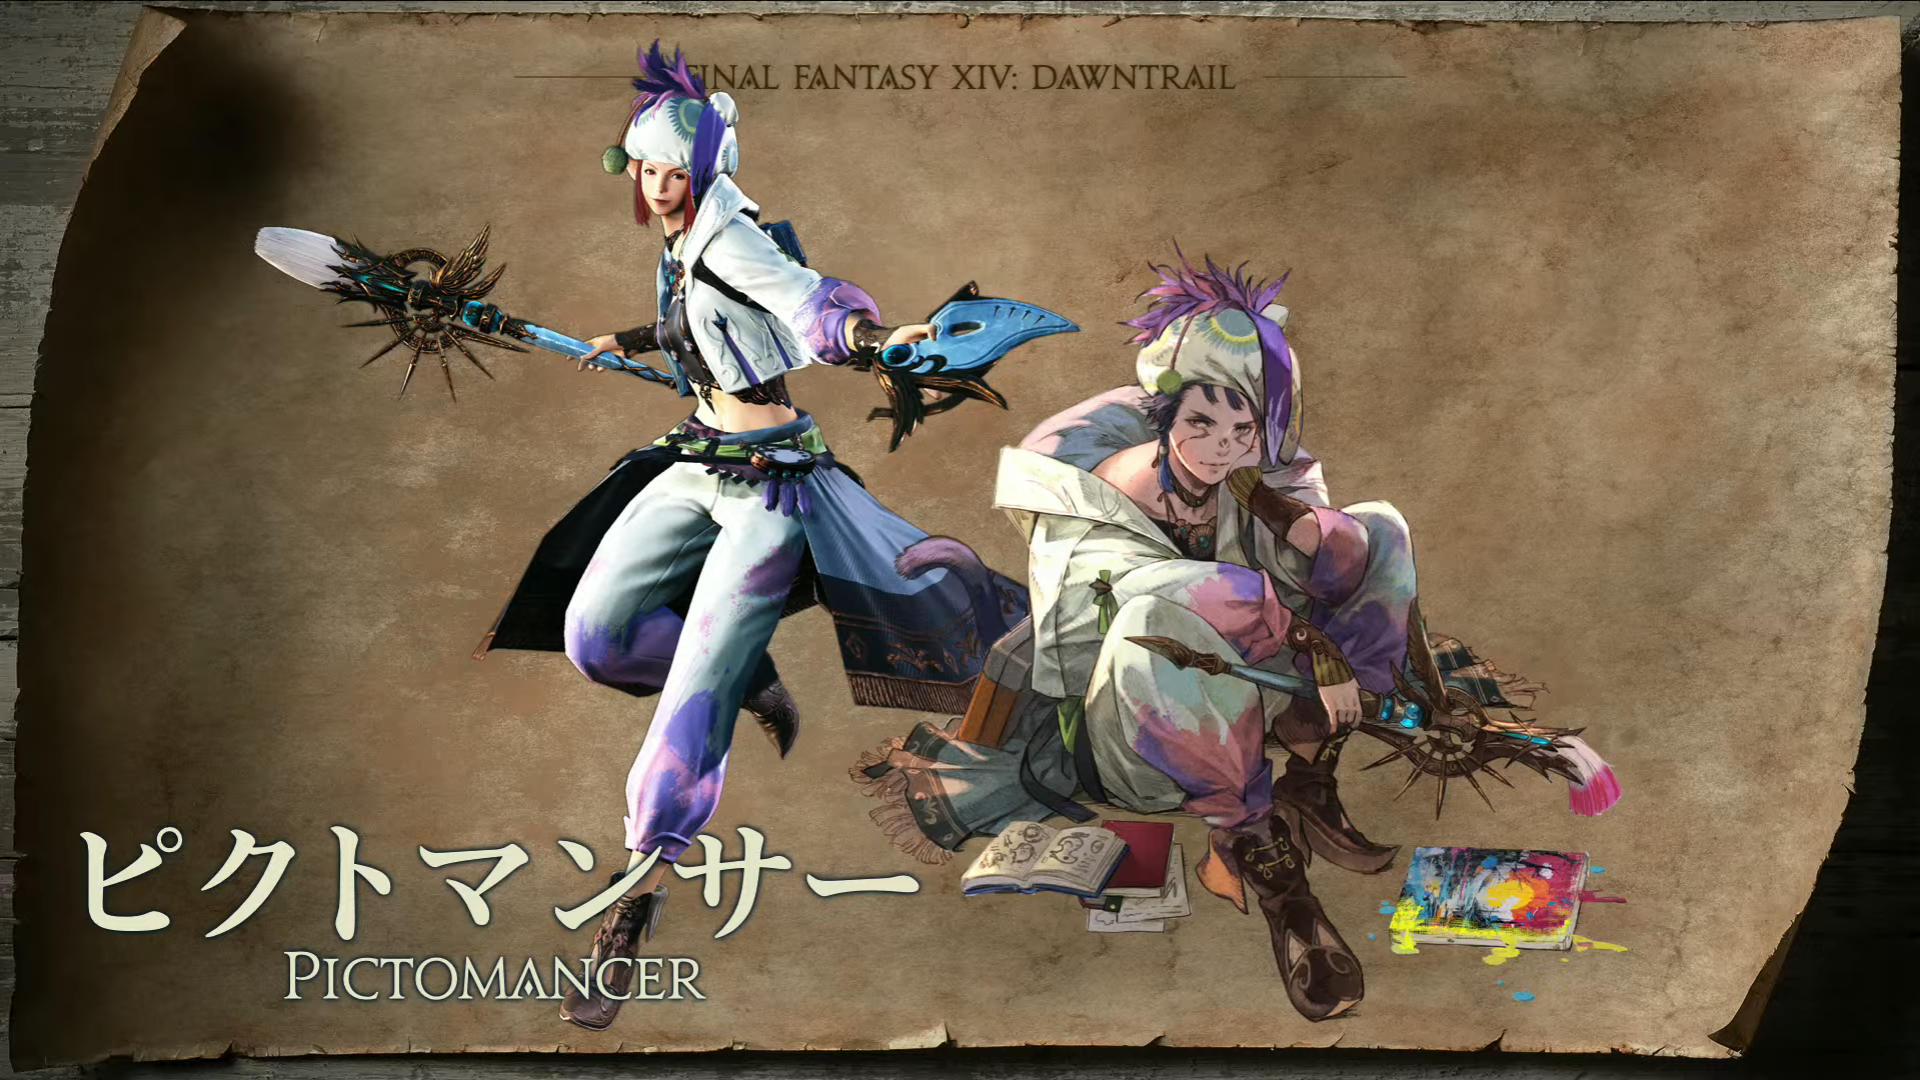 Final Fantasy XIV Reveals New Pictomancer Class